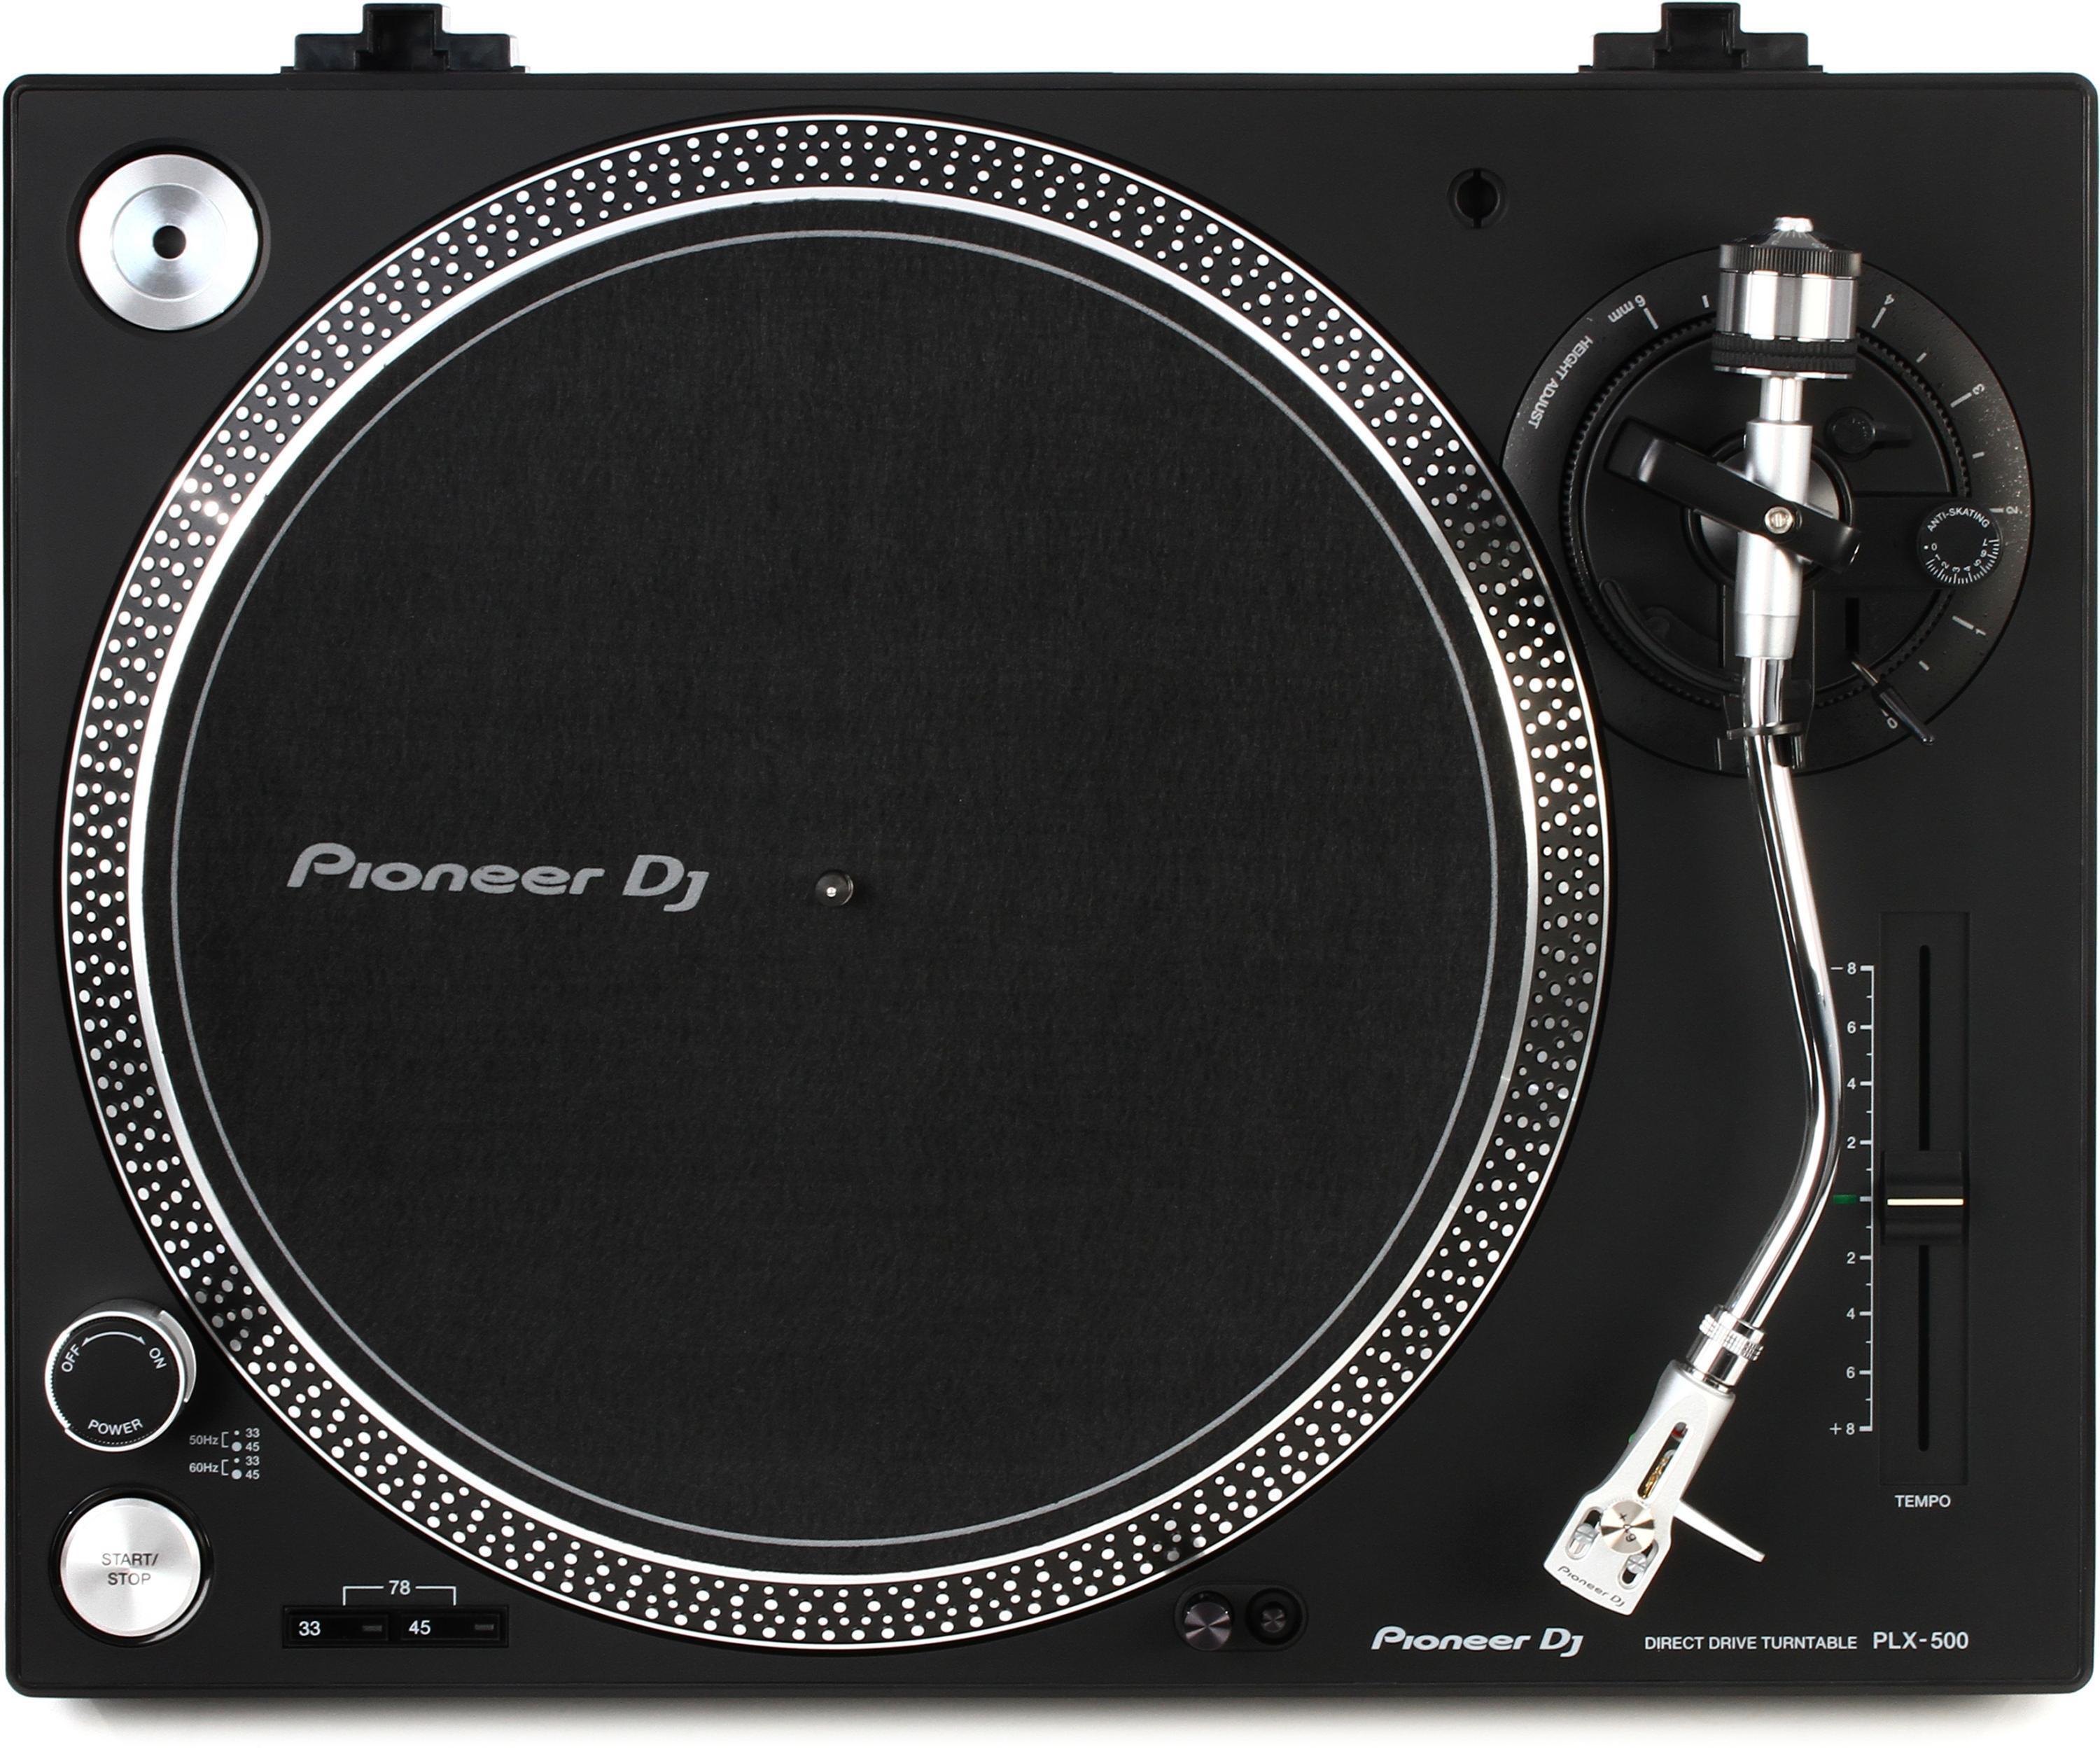 Bundled Item: Pioneer DJ PLX-500 Direct Drive Turntable